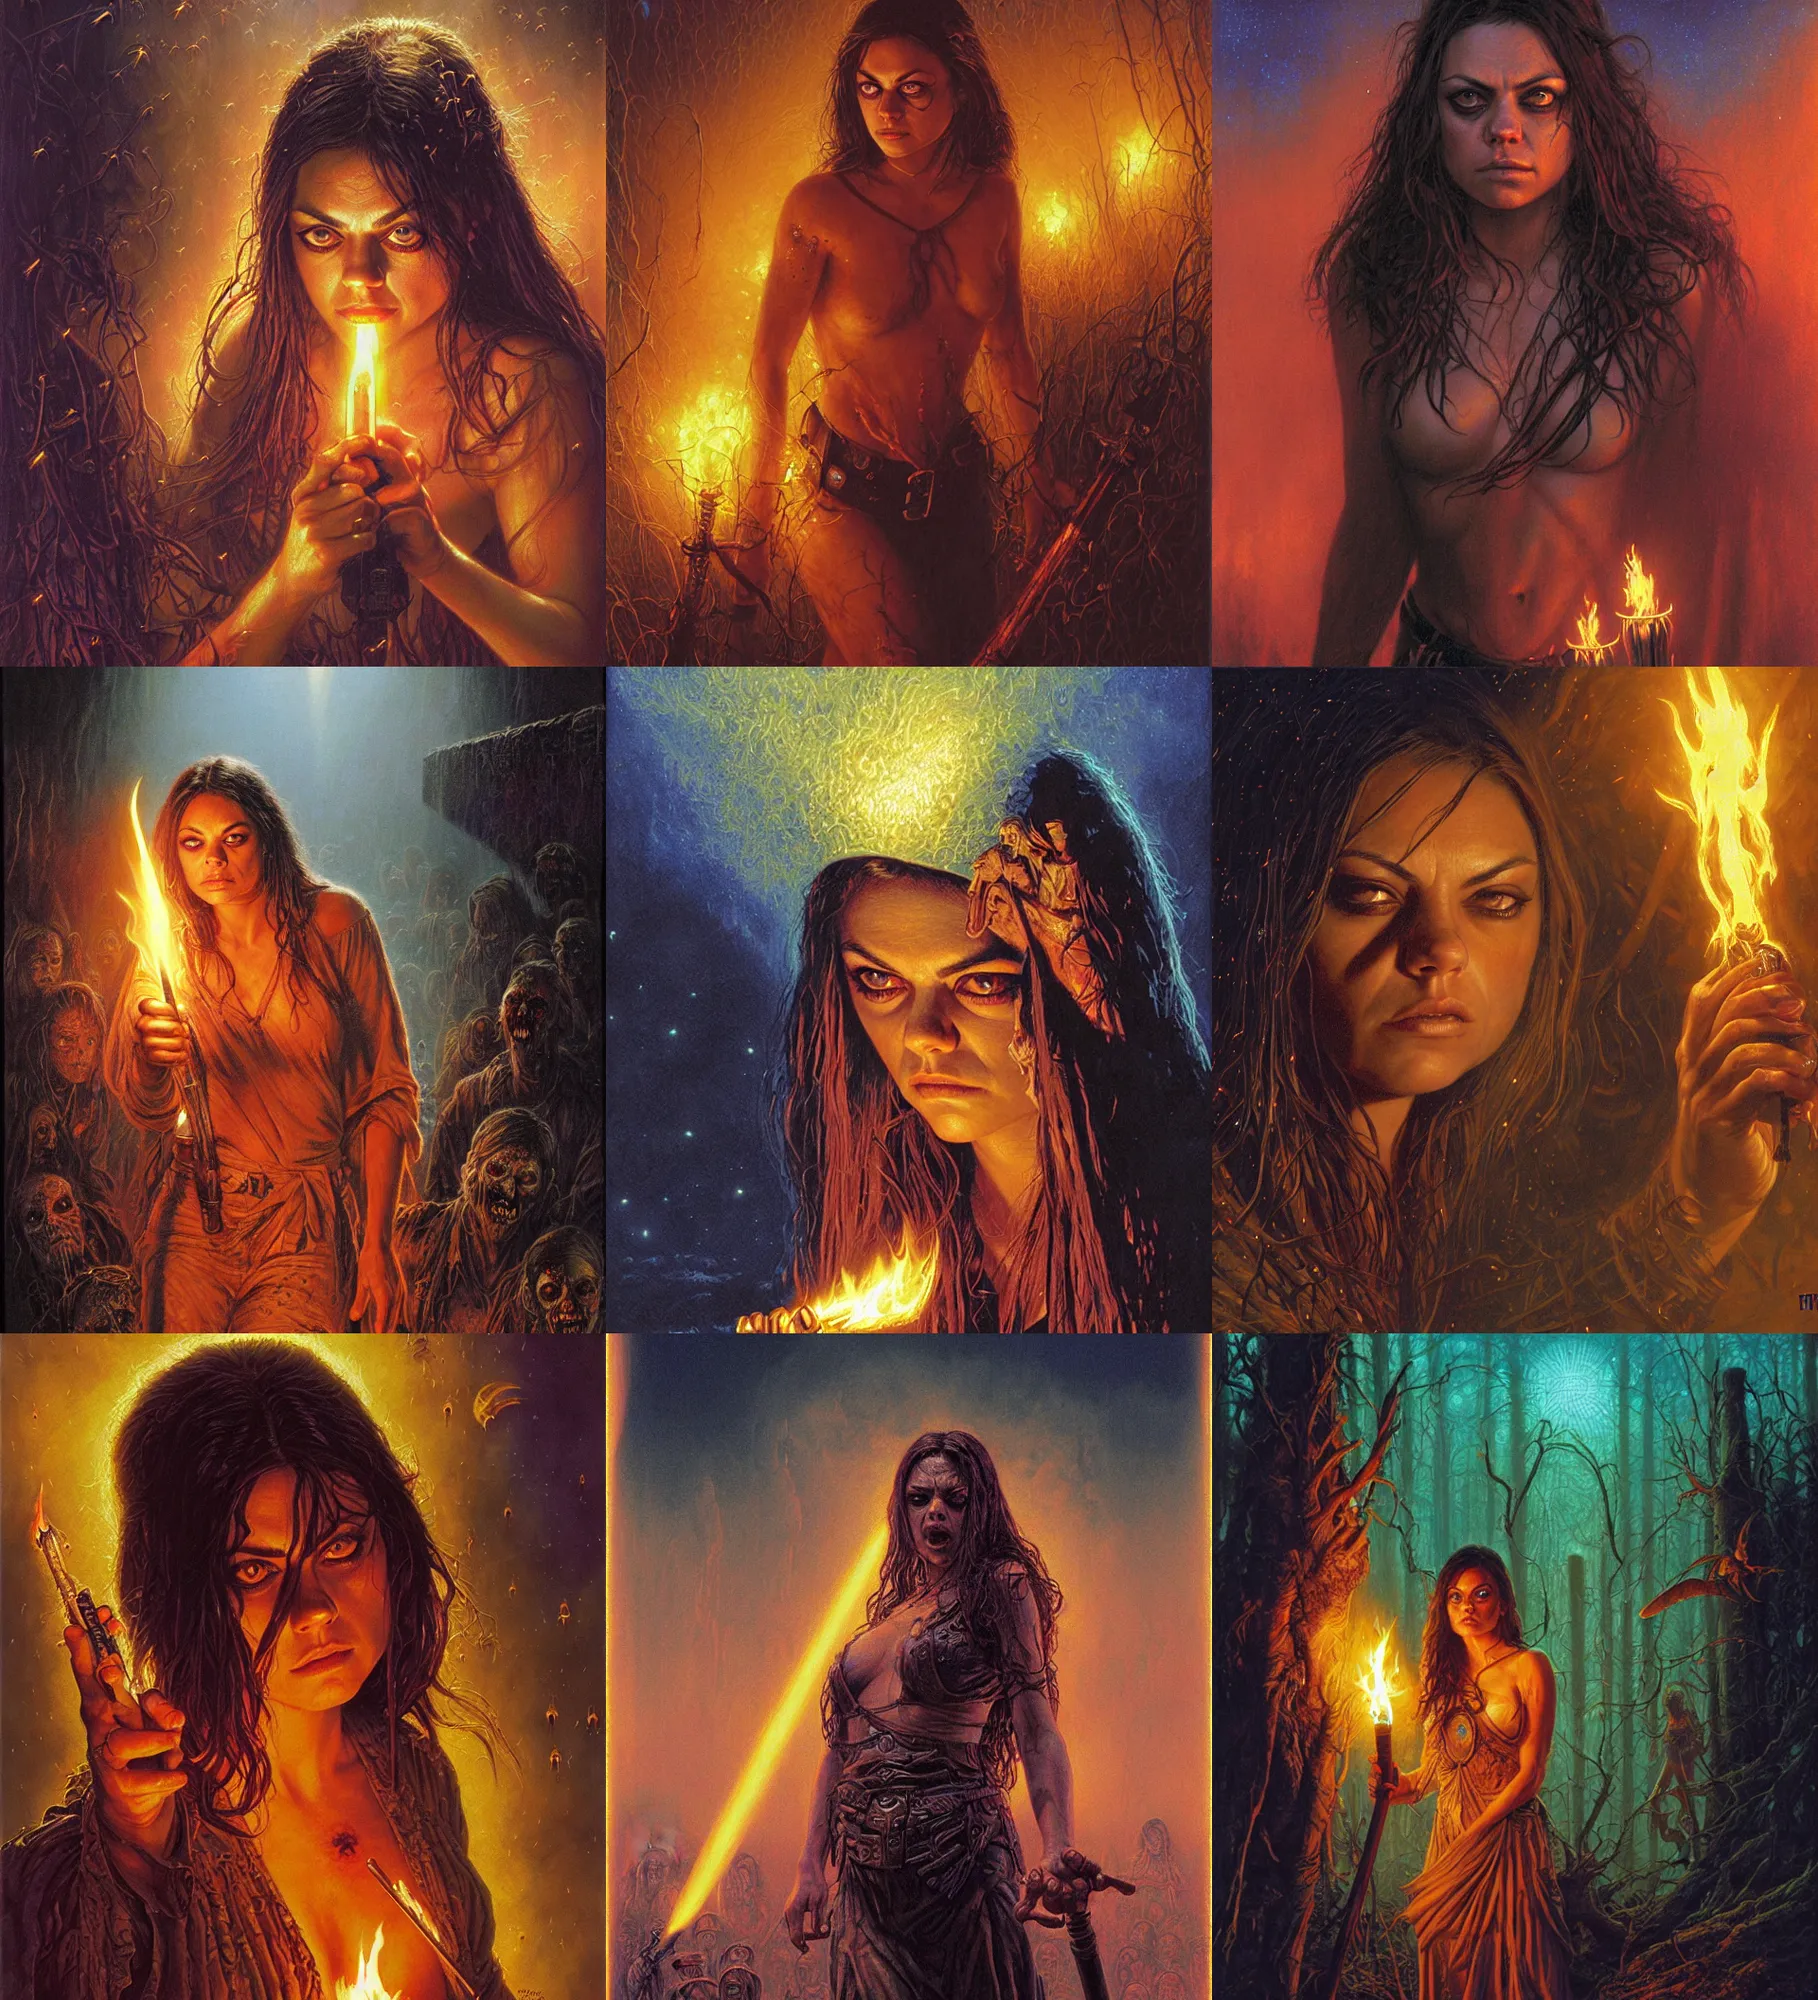 Prompt: priestess mila kunis action close - up portrait as zombies storm in, fog, fireflies, torch light, donato giancola, tim hildebrandt, wayne barlow, bruce pennington, larry elmore